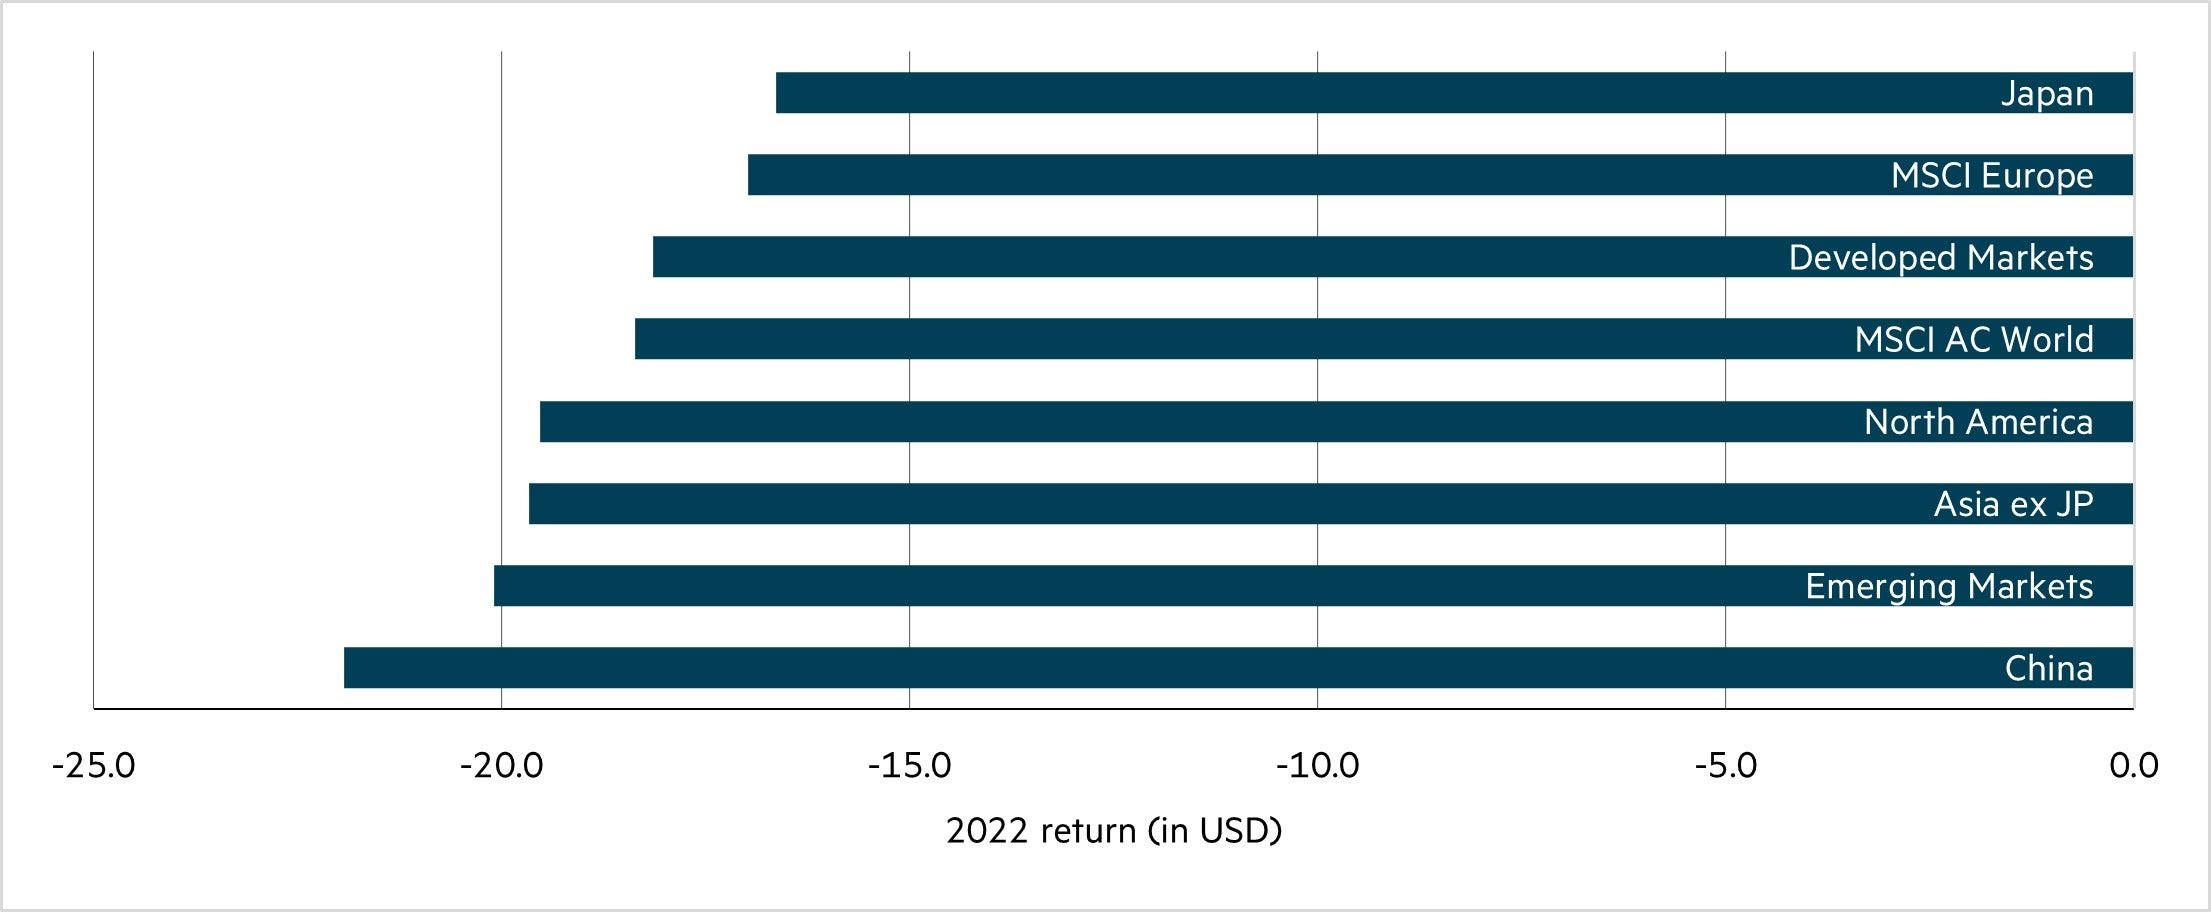 Regional returns – US dollar returns in 2022